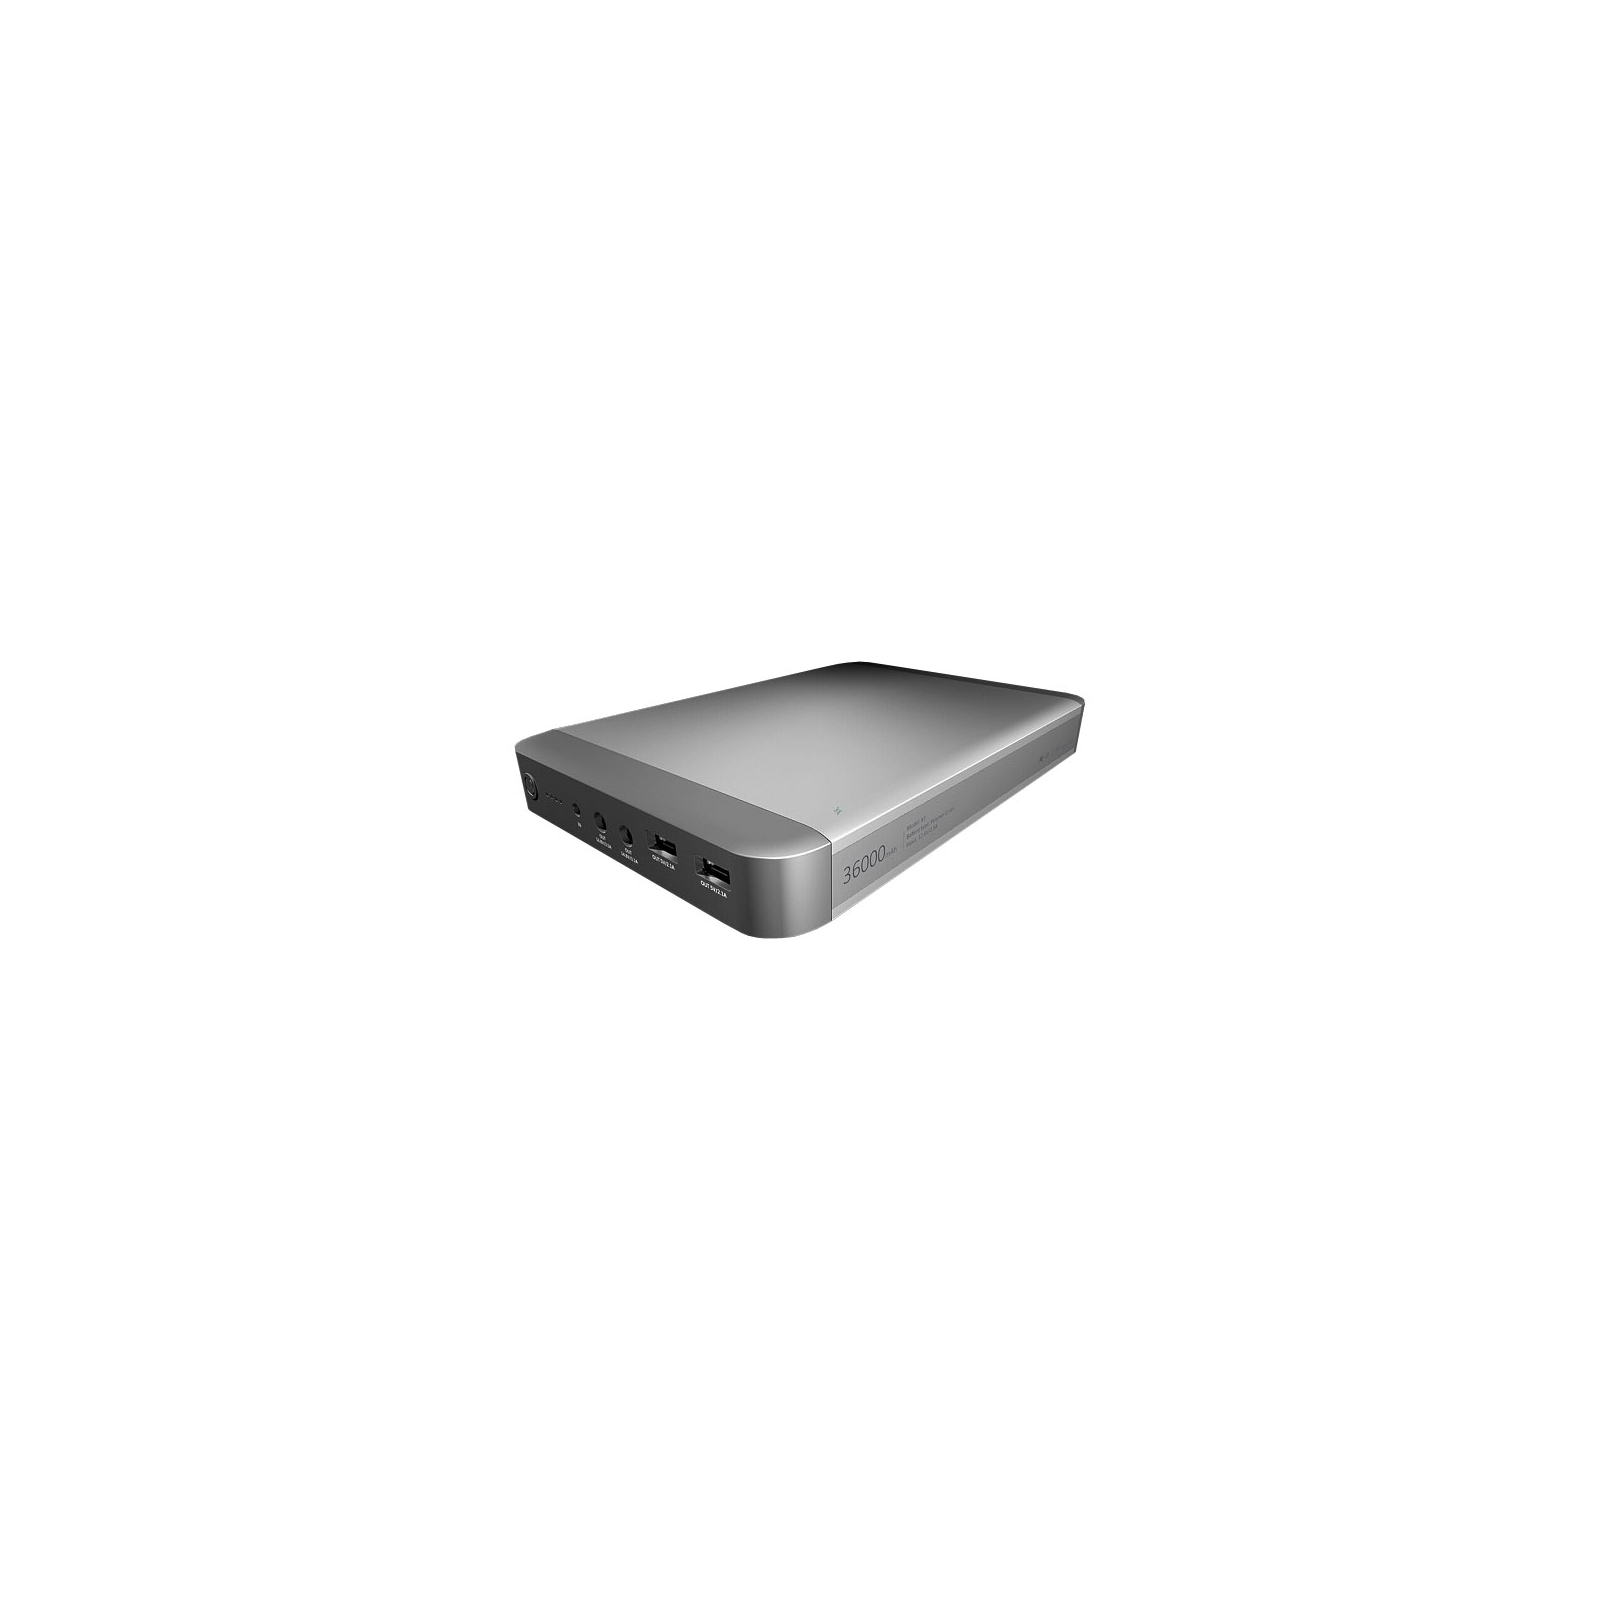 Батарея универсальная PowerPlant K3 для Аpple MacBook 36000mAh (DV00PB0004)